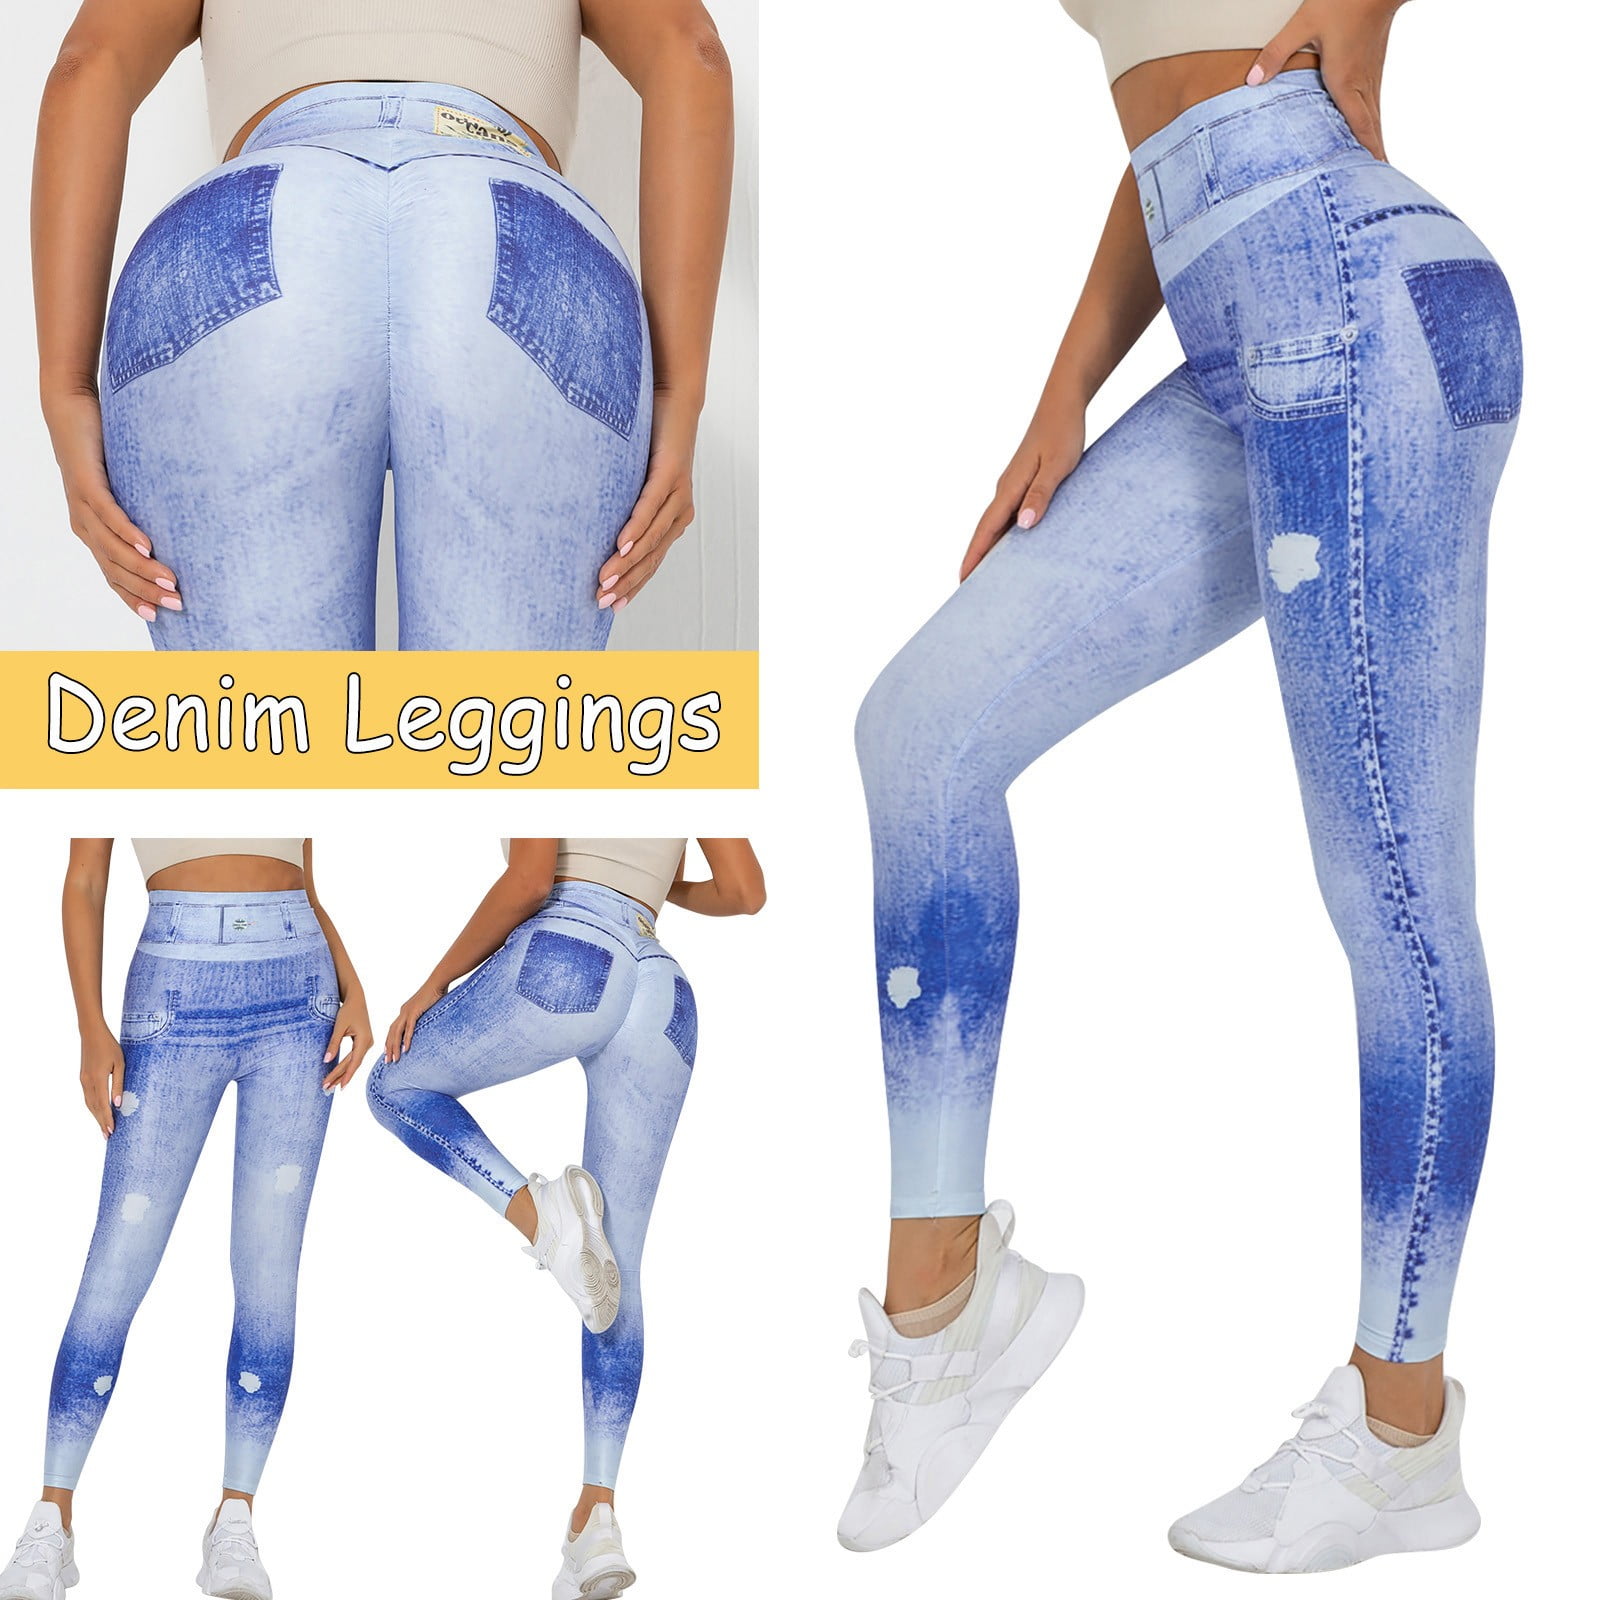 Effectiviteit Haven meubilair women leggings high waist 7/8 Women's Denim Print Fake Jeans Look Like  Leggings Sexy Stretchy High Waist Slim Skinny Jeggings - Walmart.com